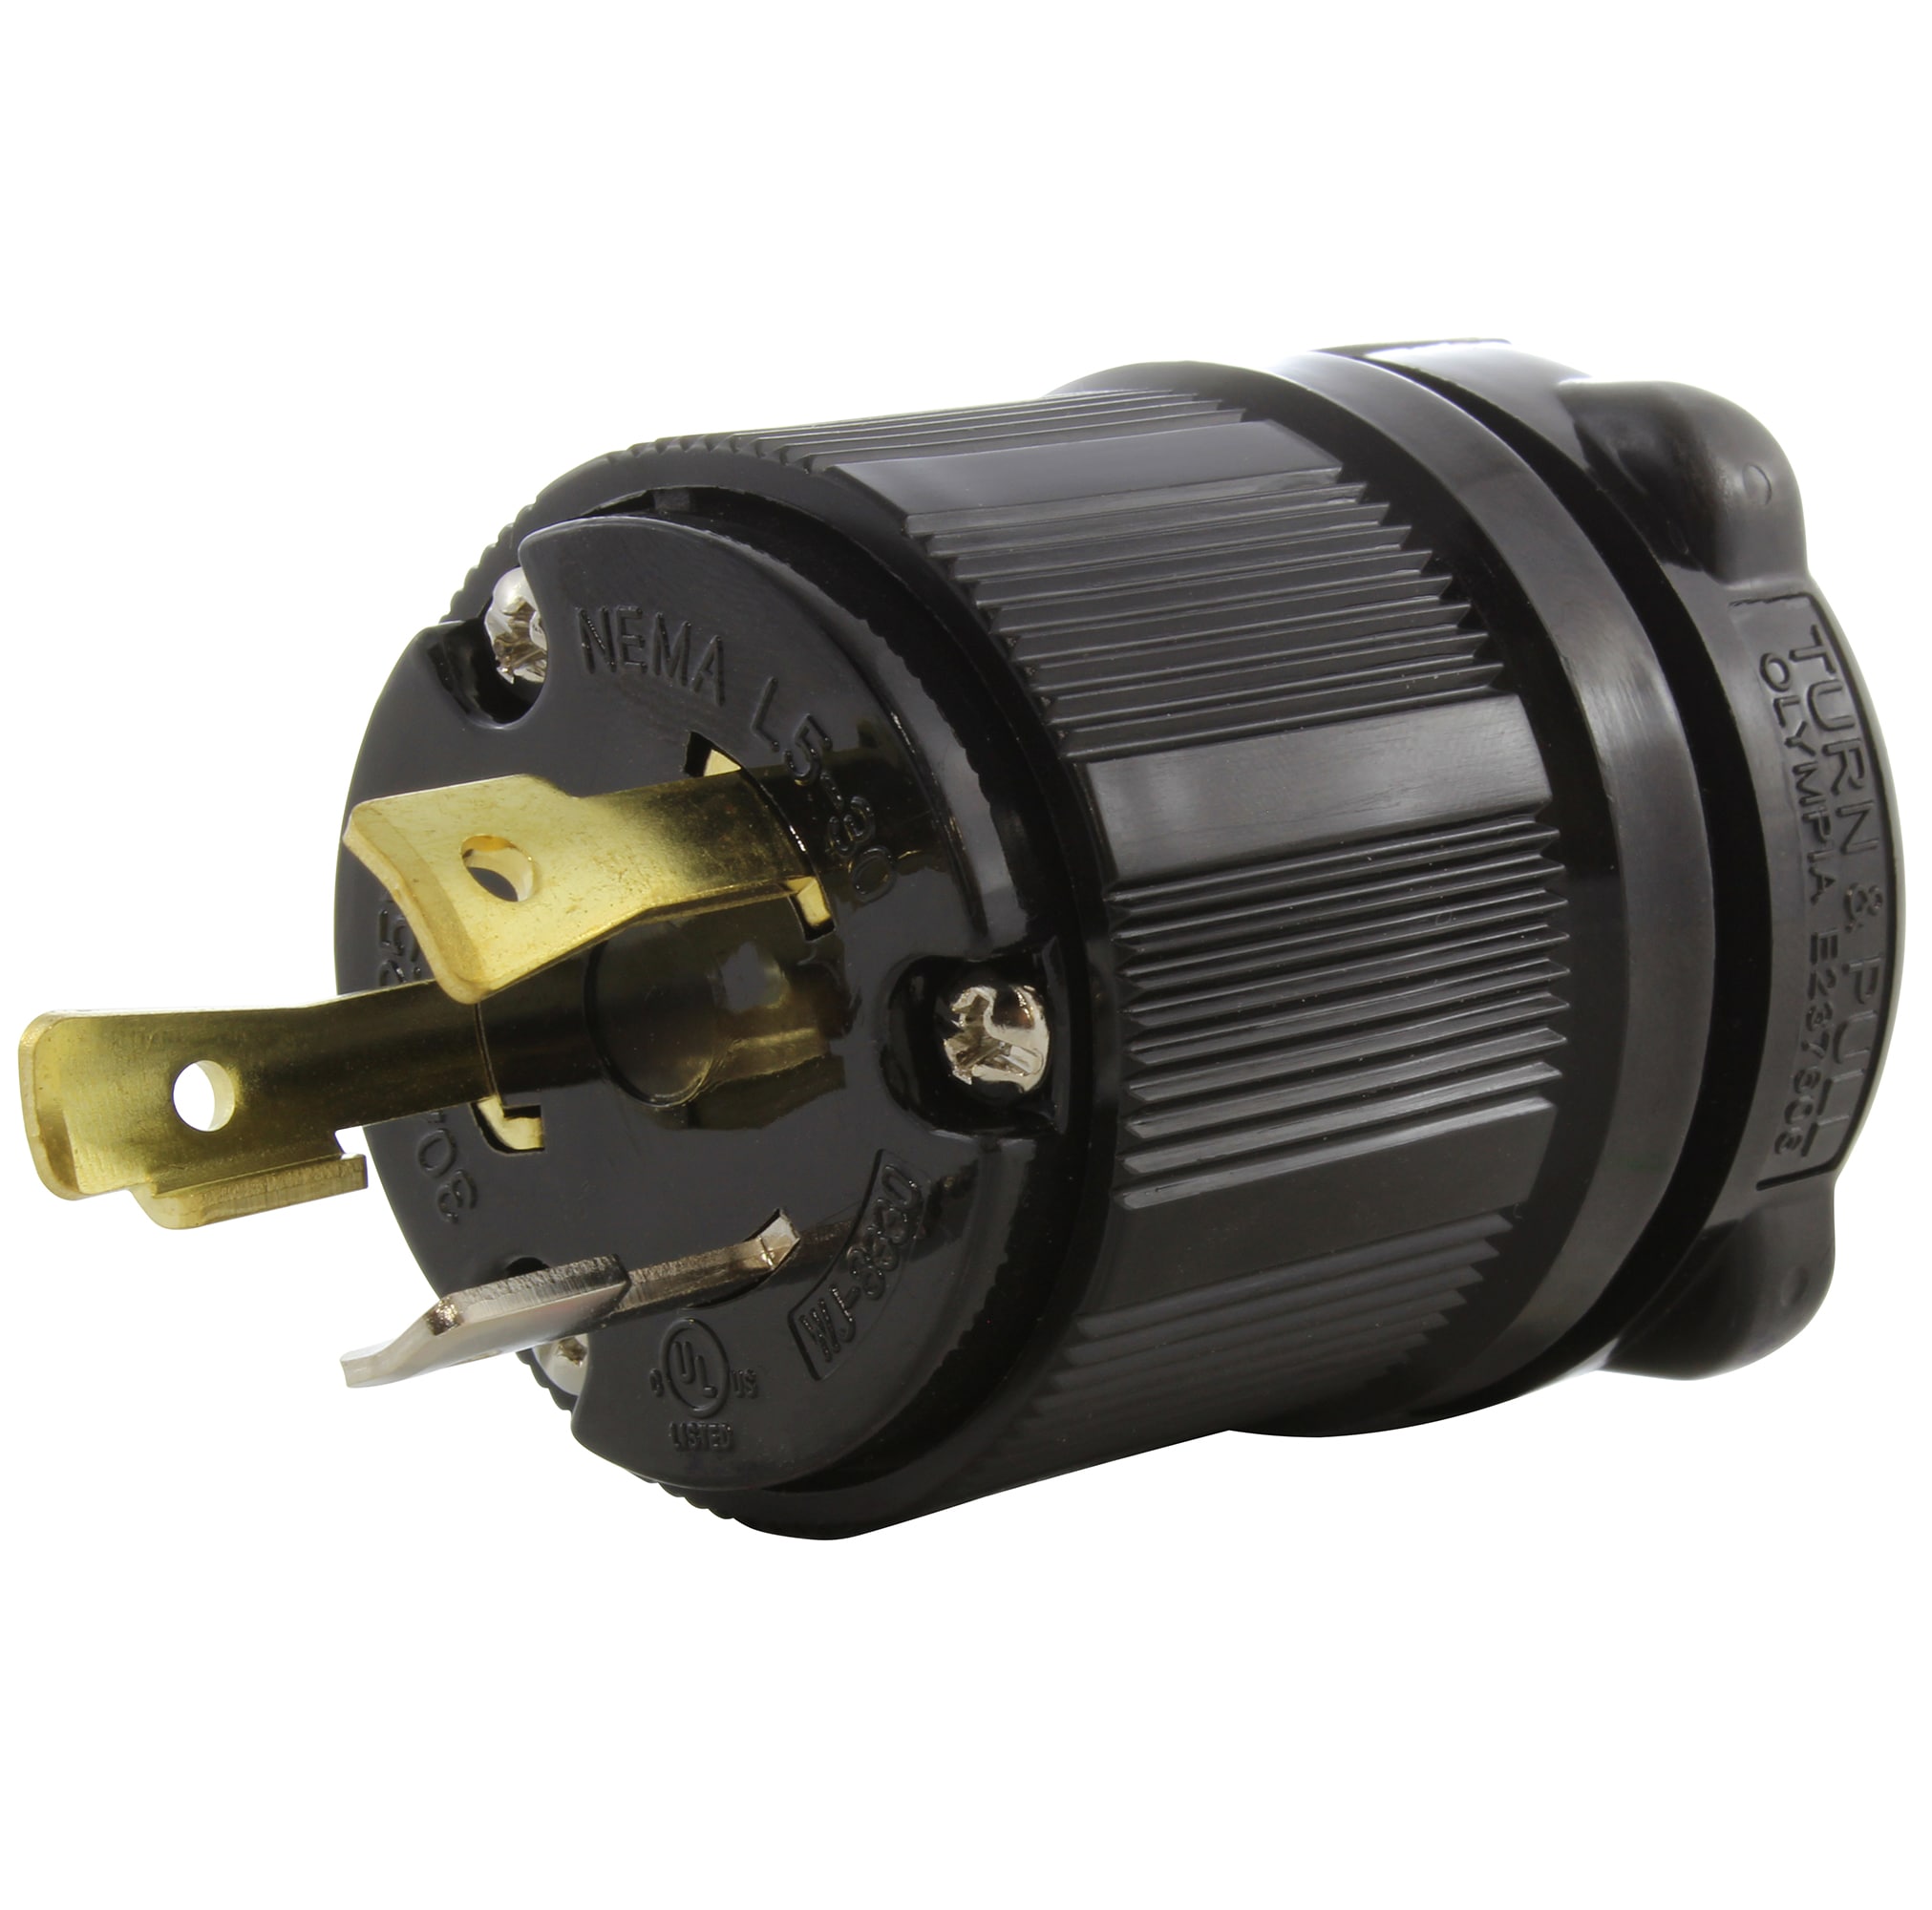 AC Works NEMA 30 Amp 125-Volt 3 Prong Locking Male Plug with UL C-UL Approval, Black